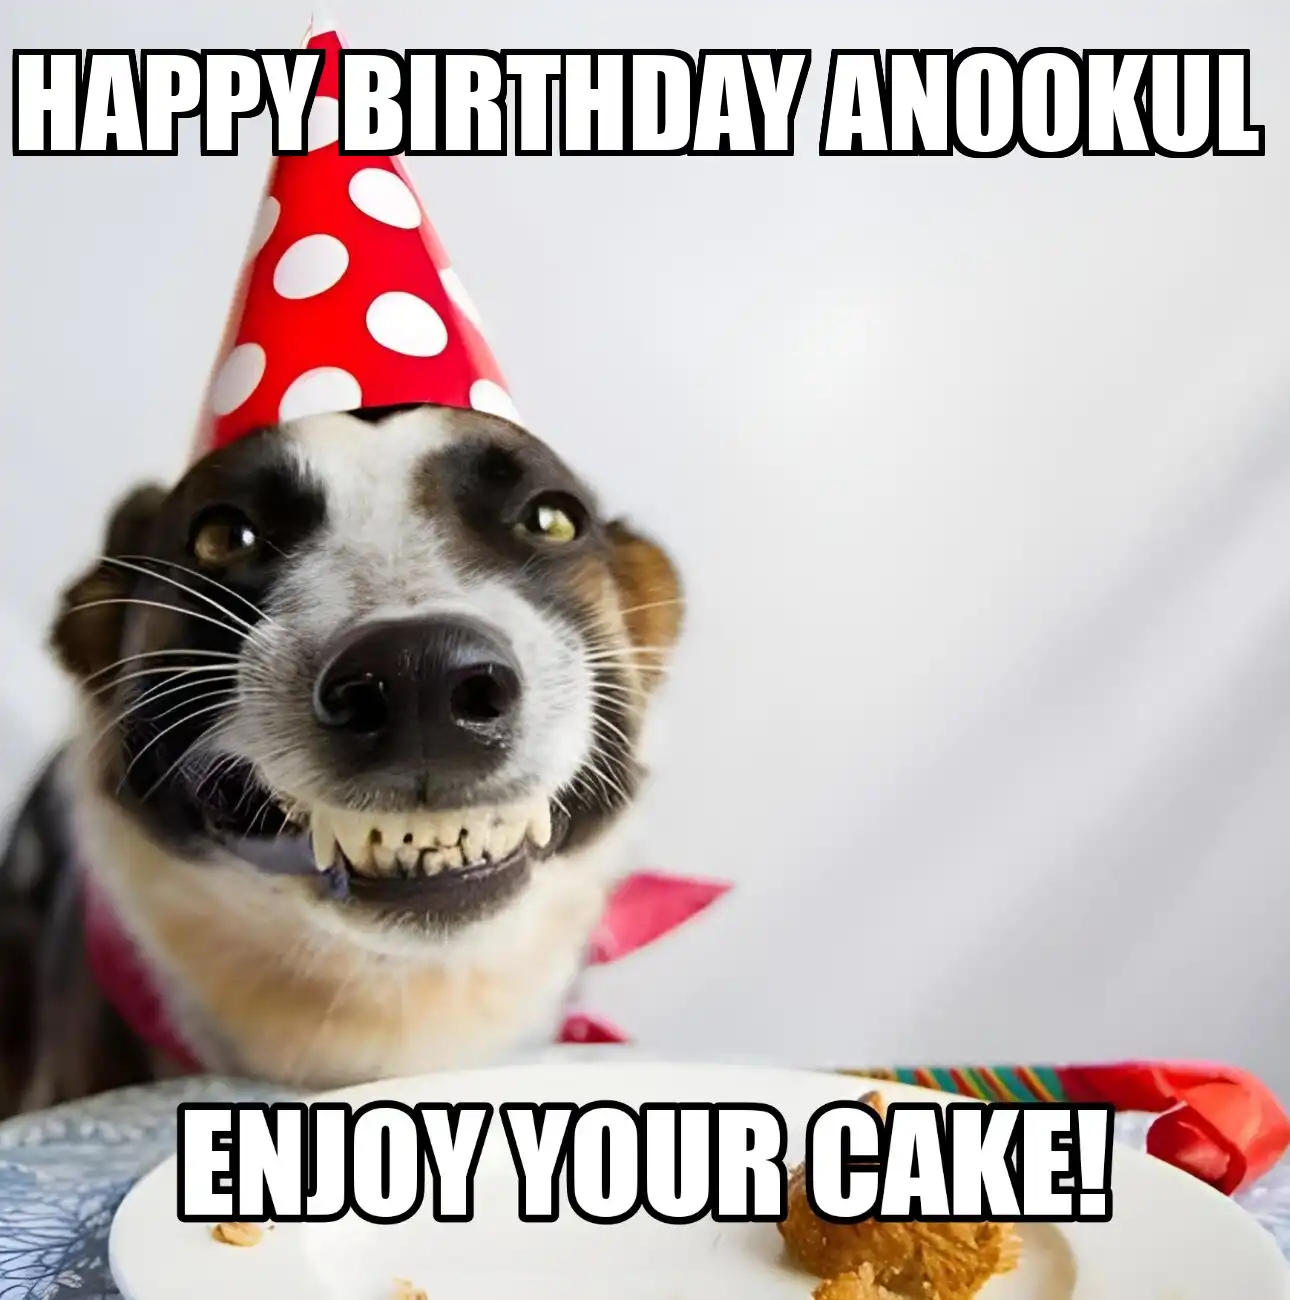 Happy Birthday Anookul Enjoy Your Cake Dog Meme